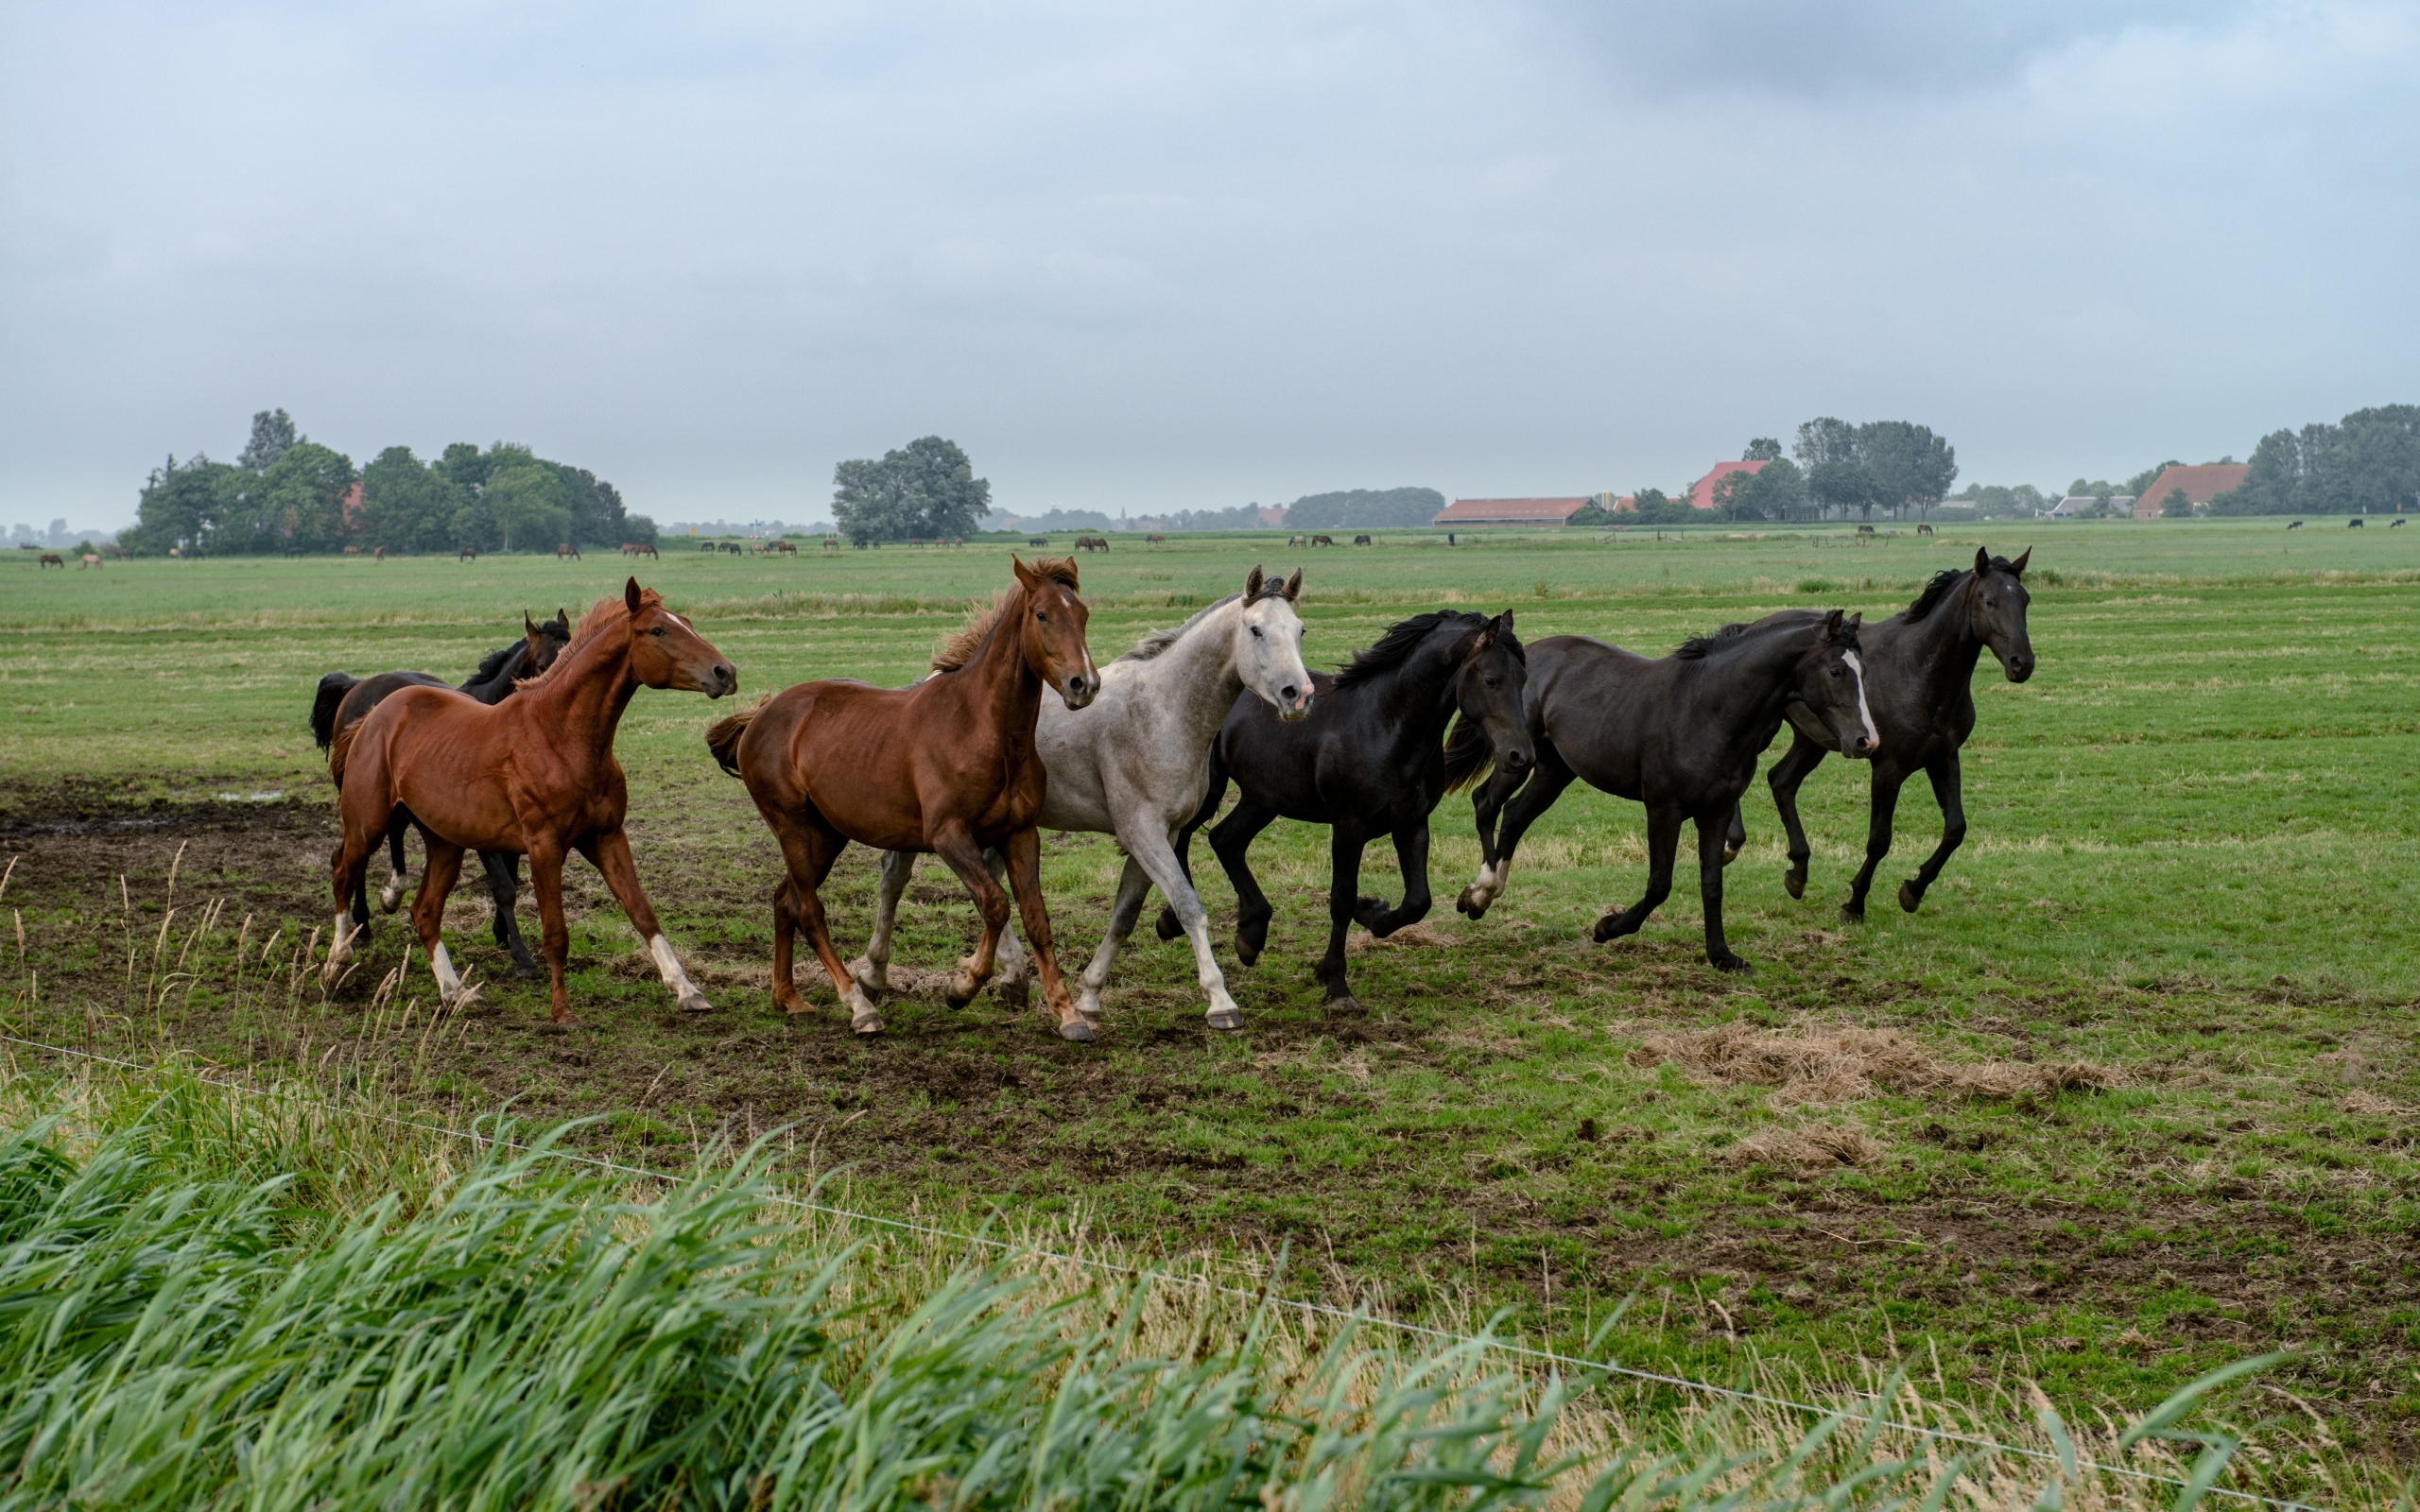 horses, animals Desktop Wallpaper